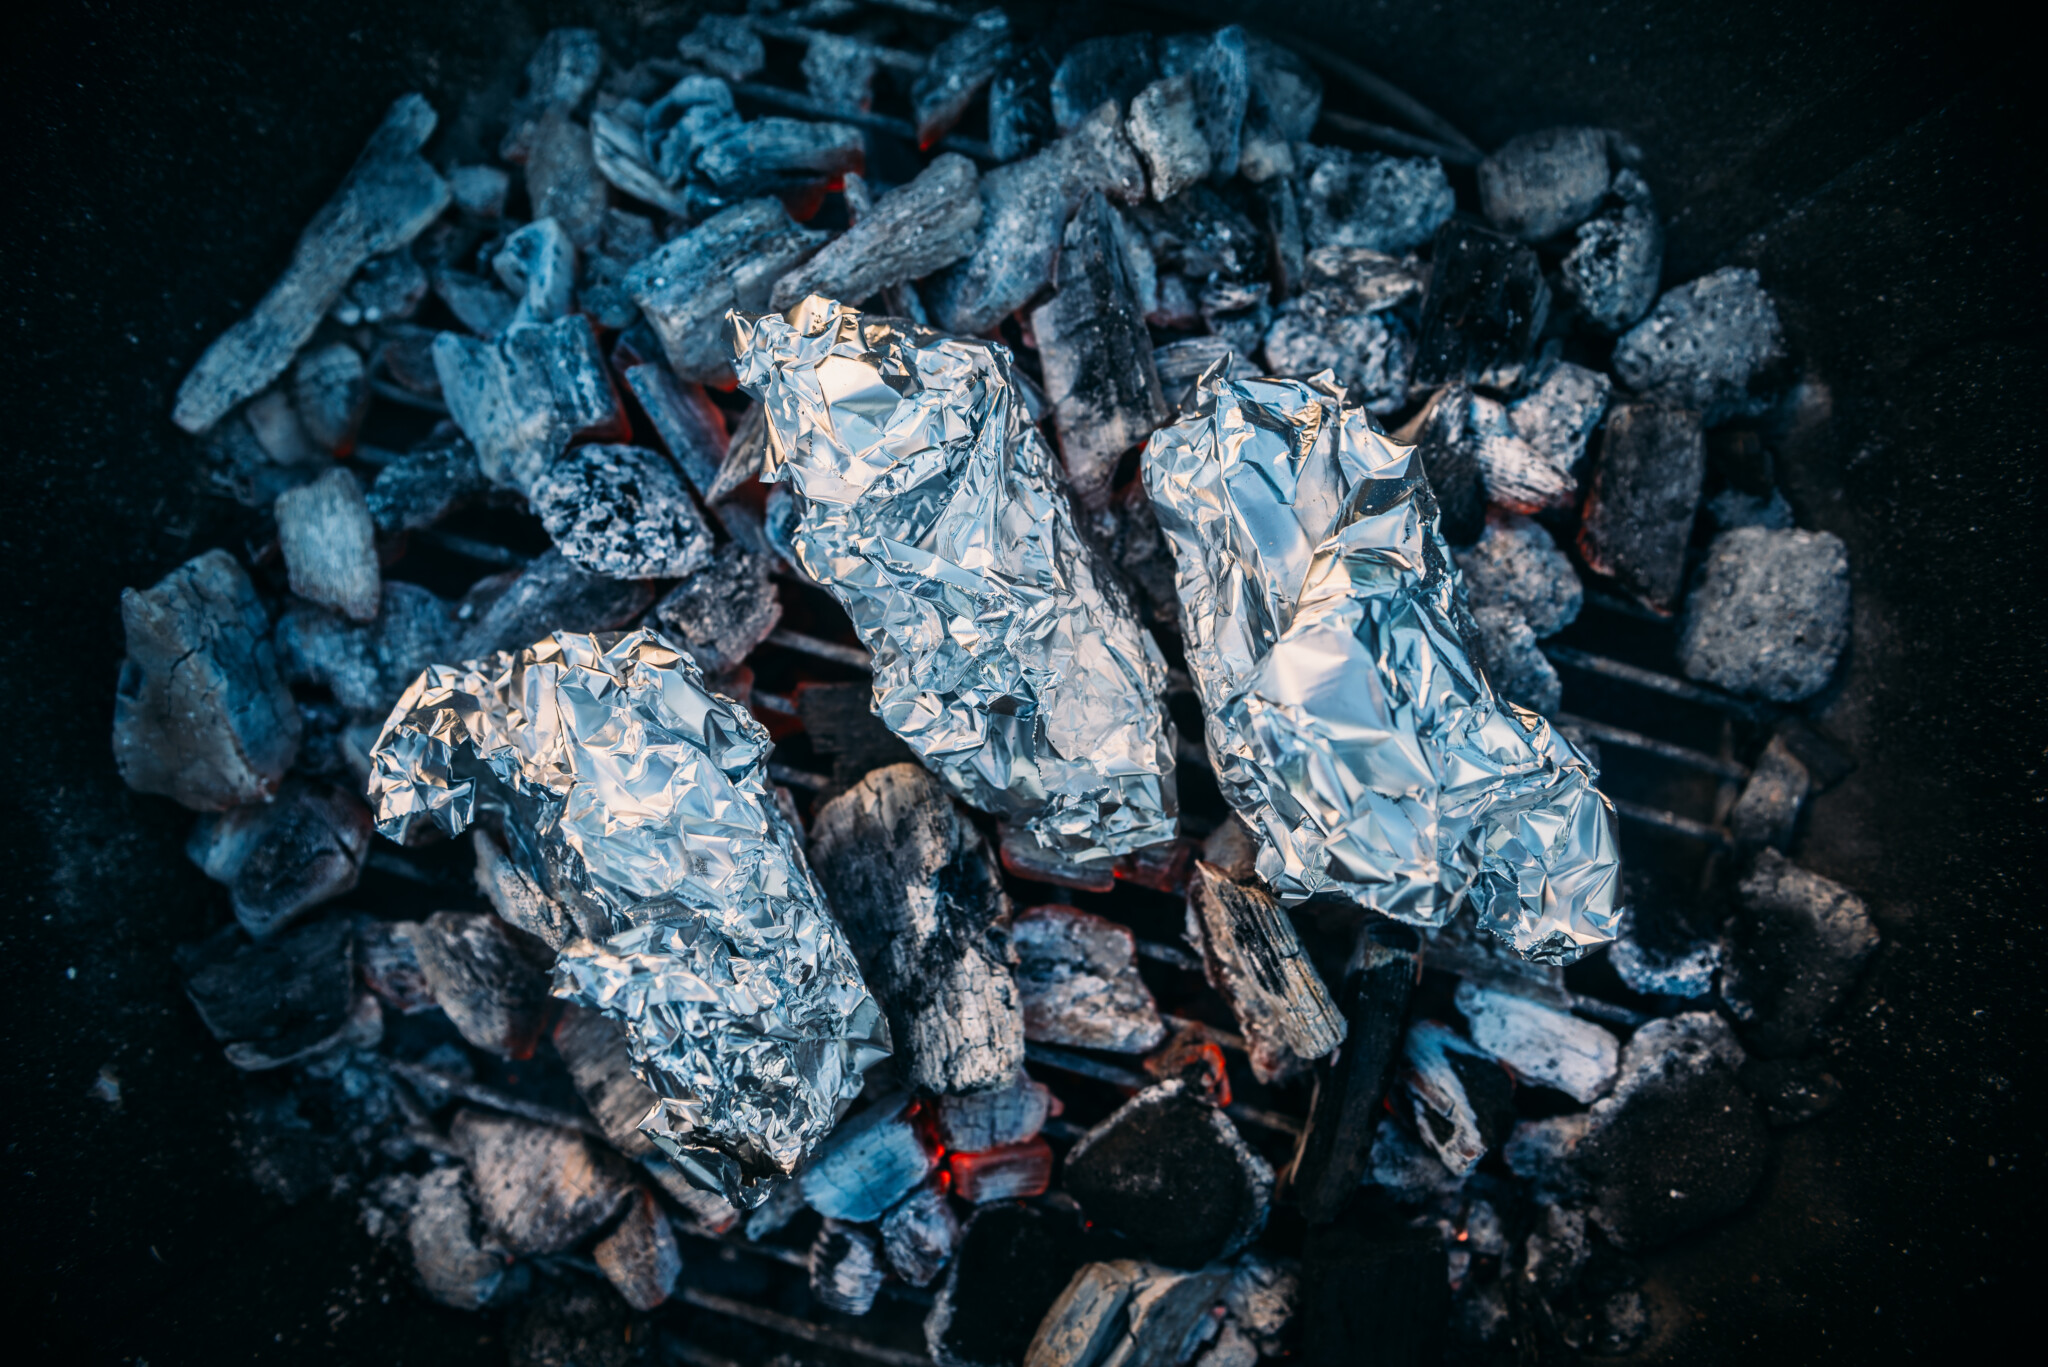 Campfire baked potatoes in coals. 